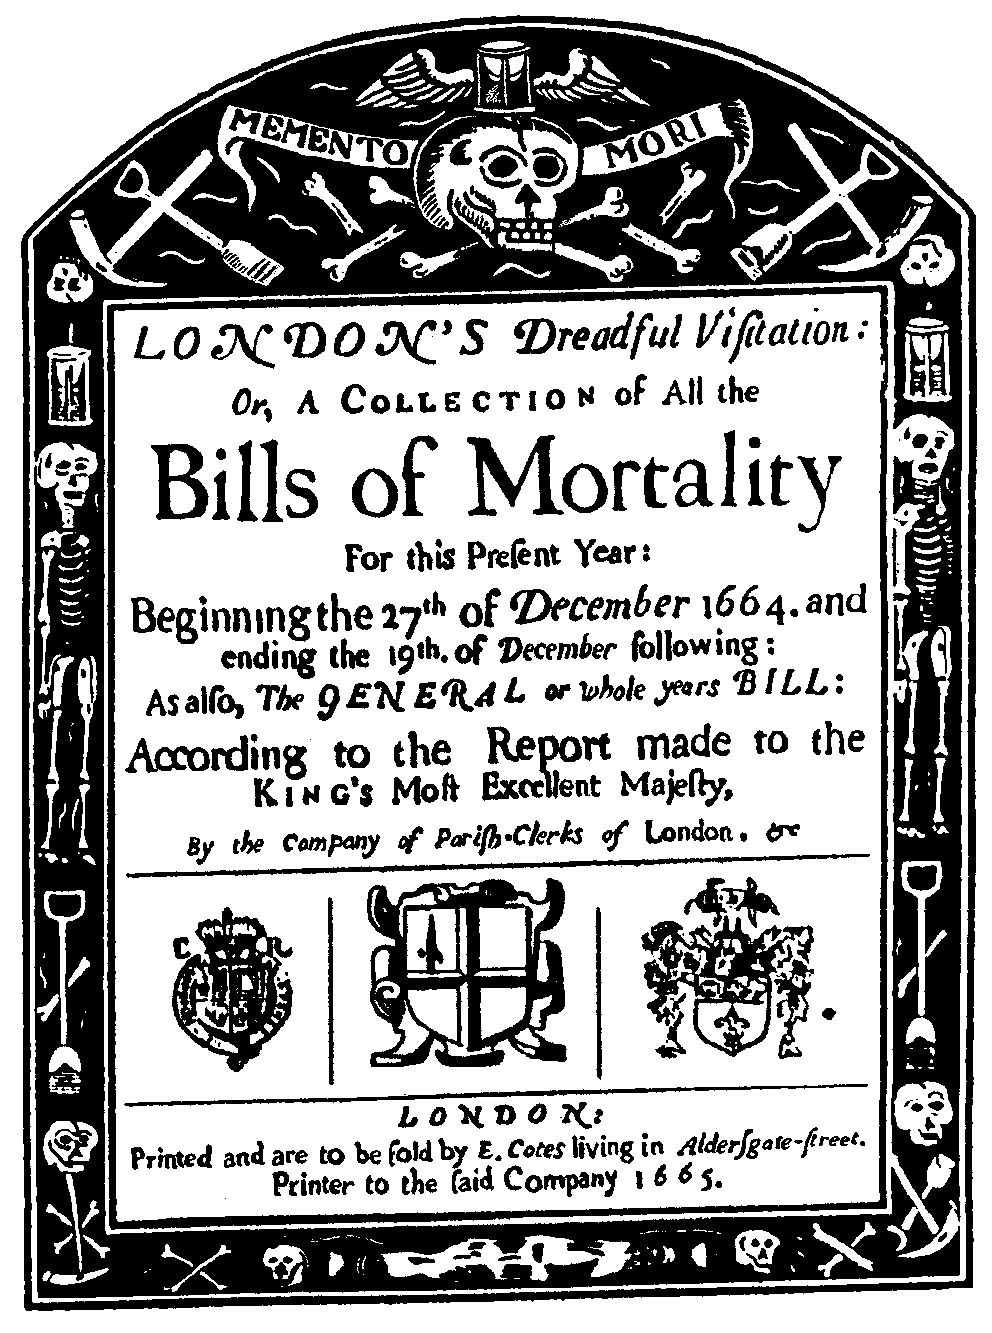 The Bills of Mortality